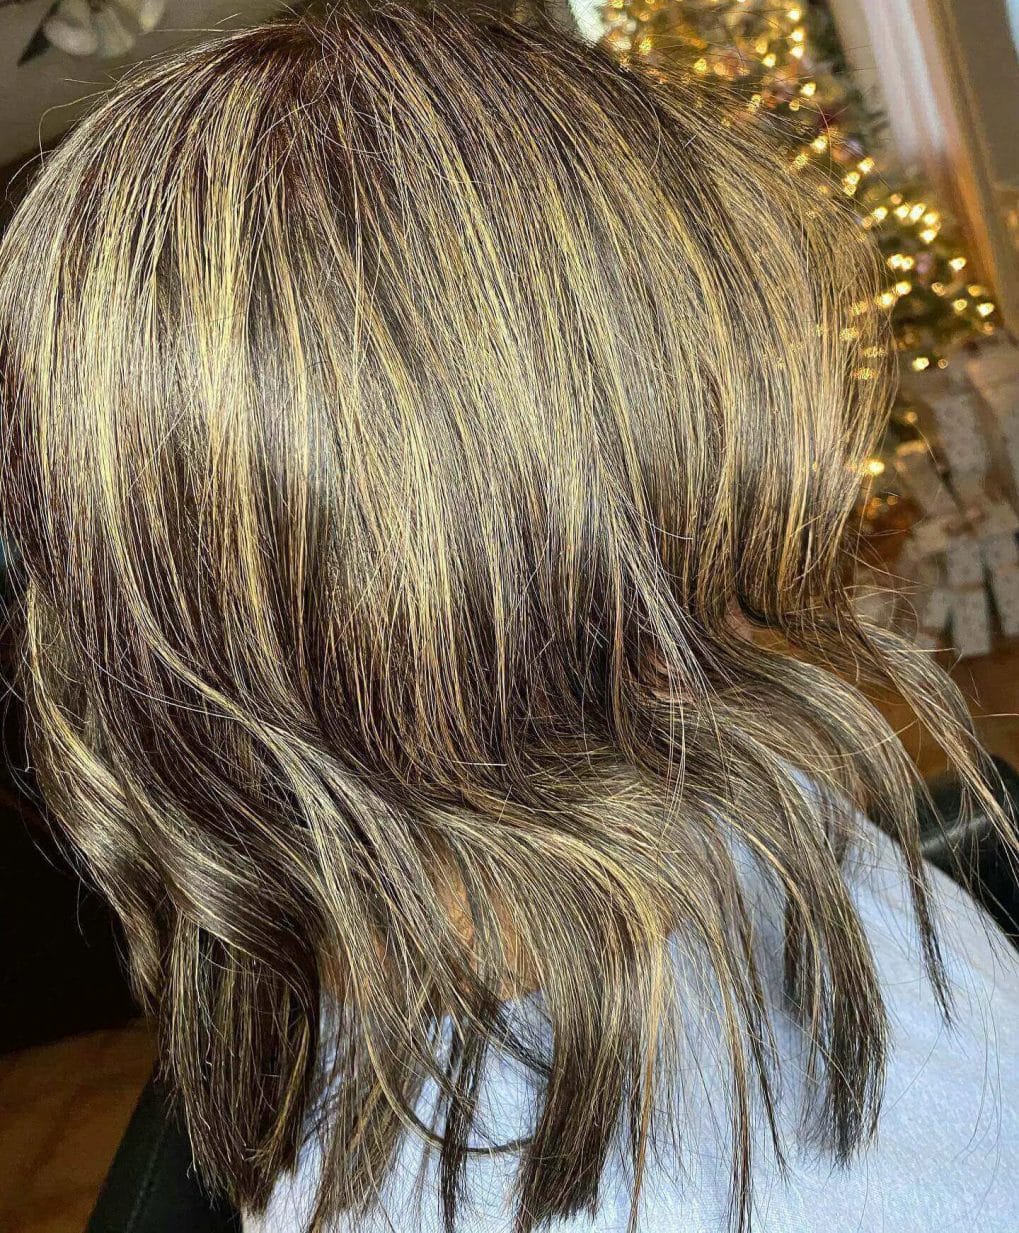 Medium-length cut with soft inward curls and warm highlights.